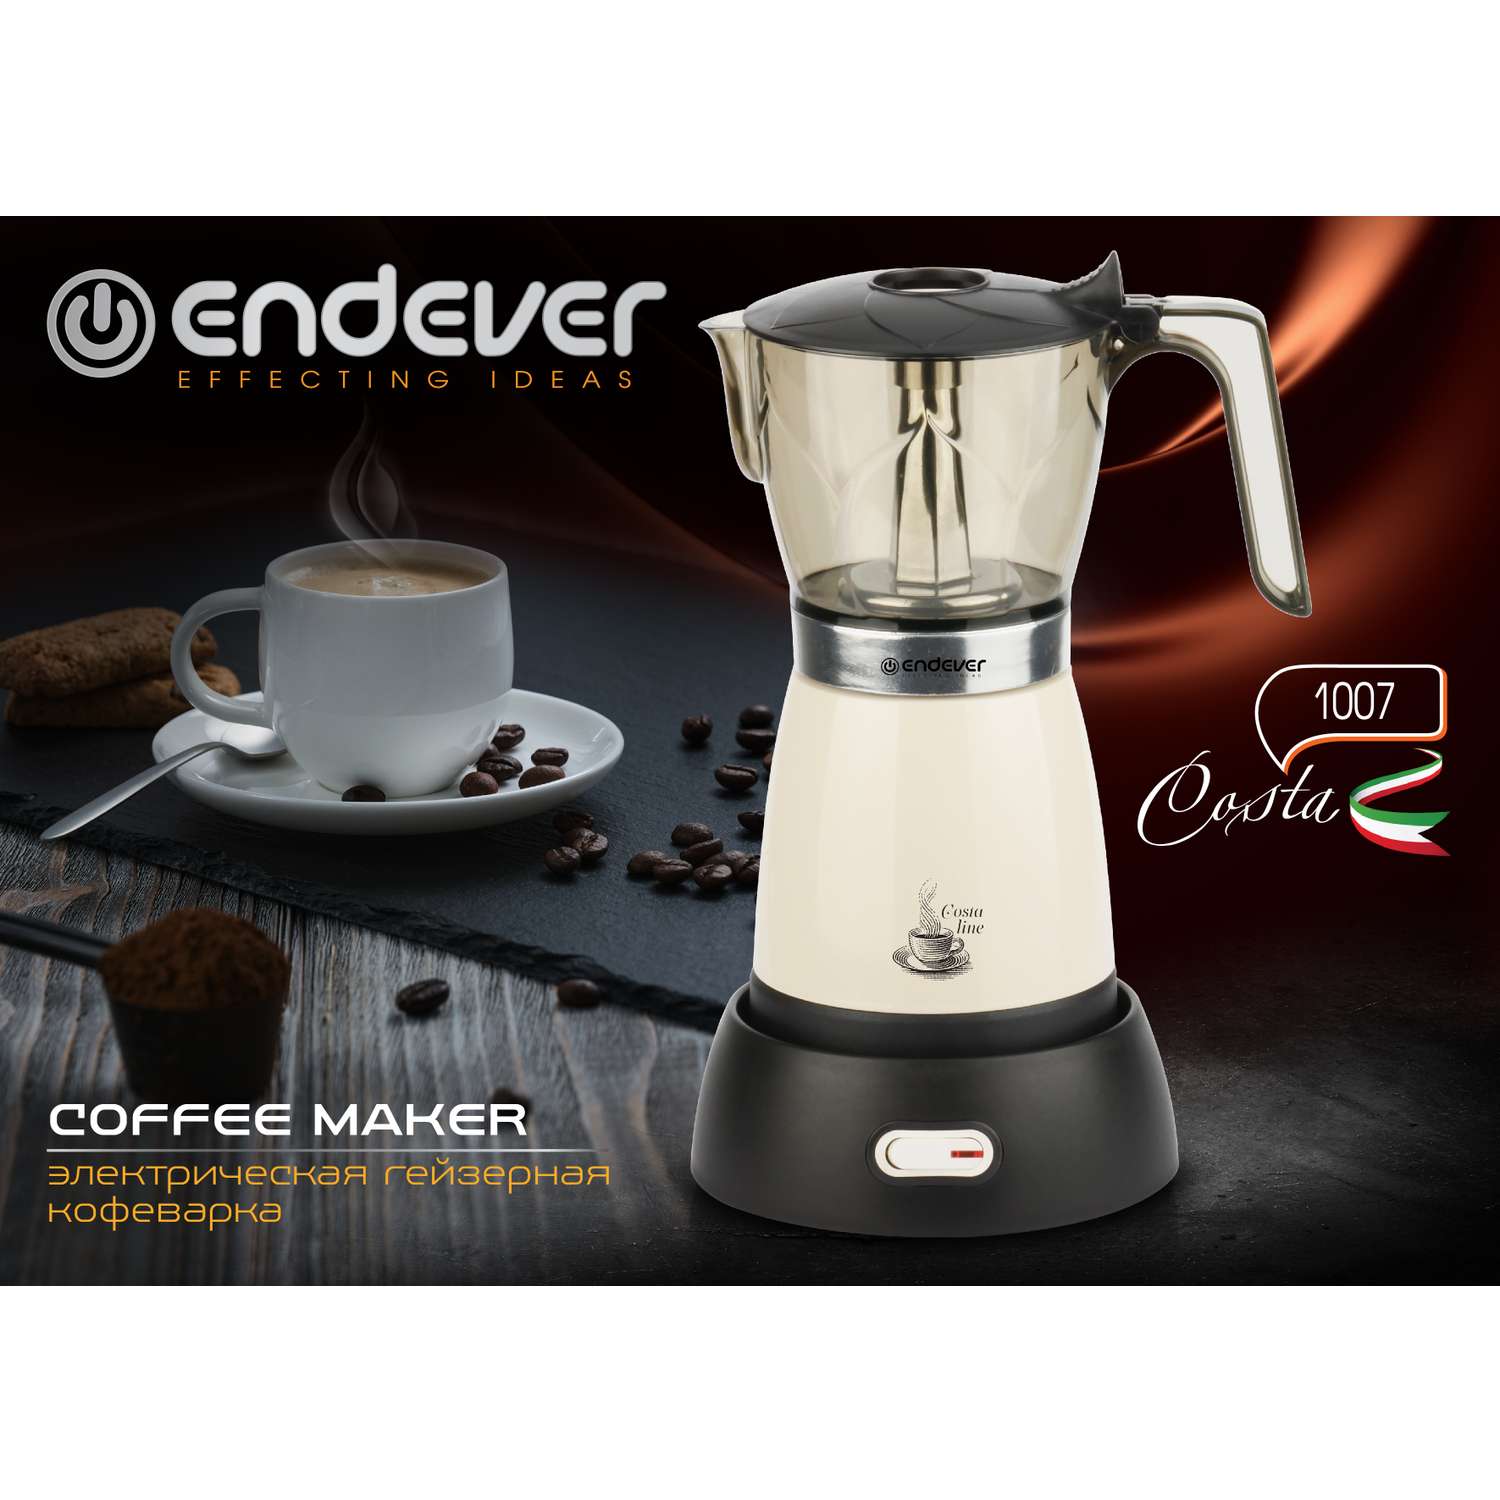 Гейзерная кофеварка ENDEVER Costa-1007 - фото 4